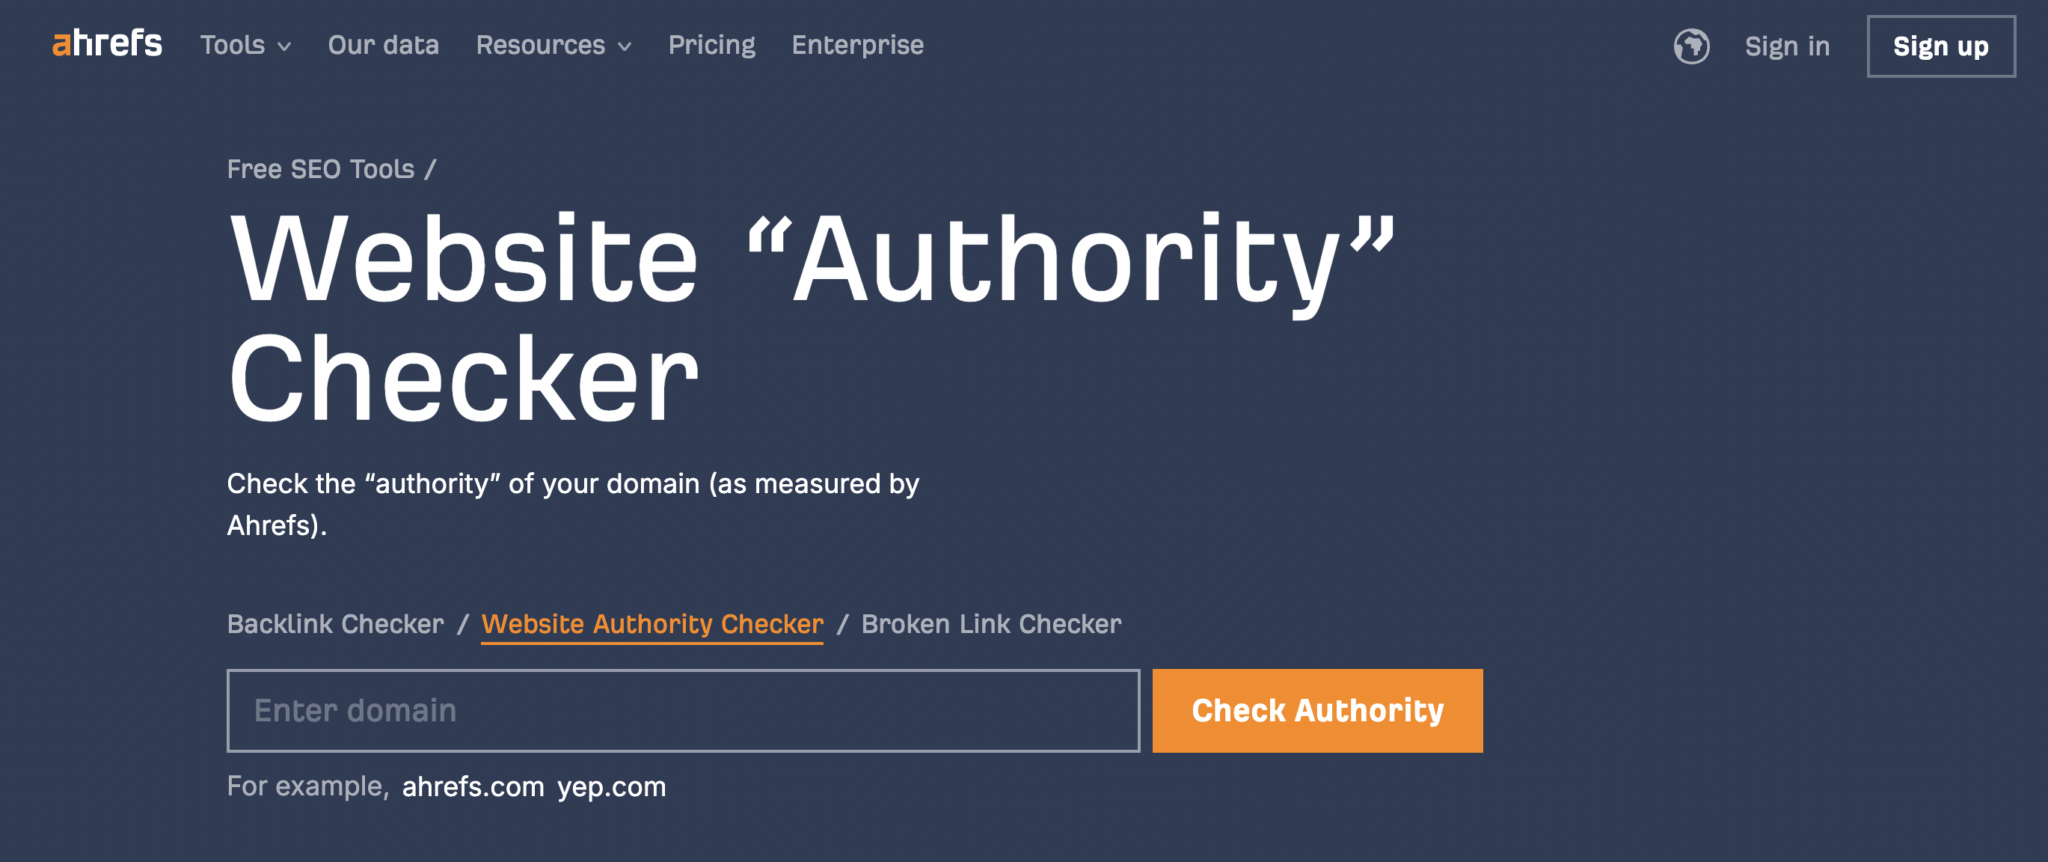 Ahrefs website authority checker.